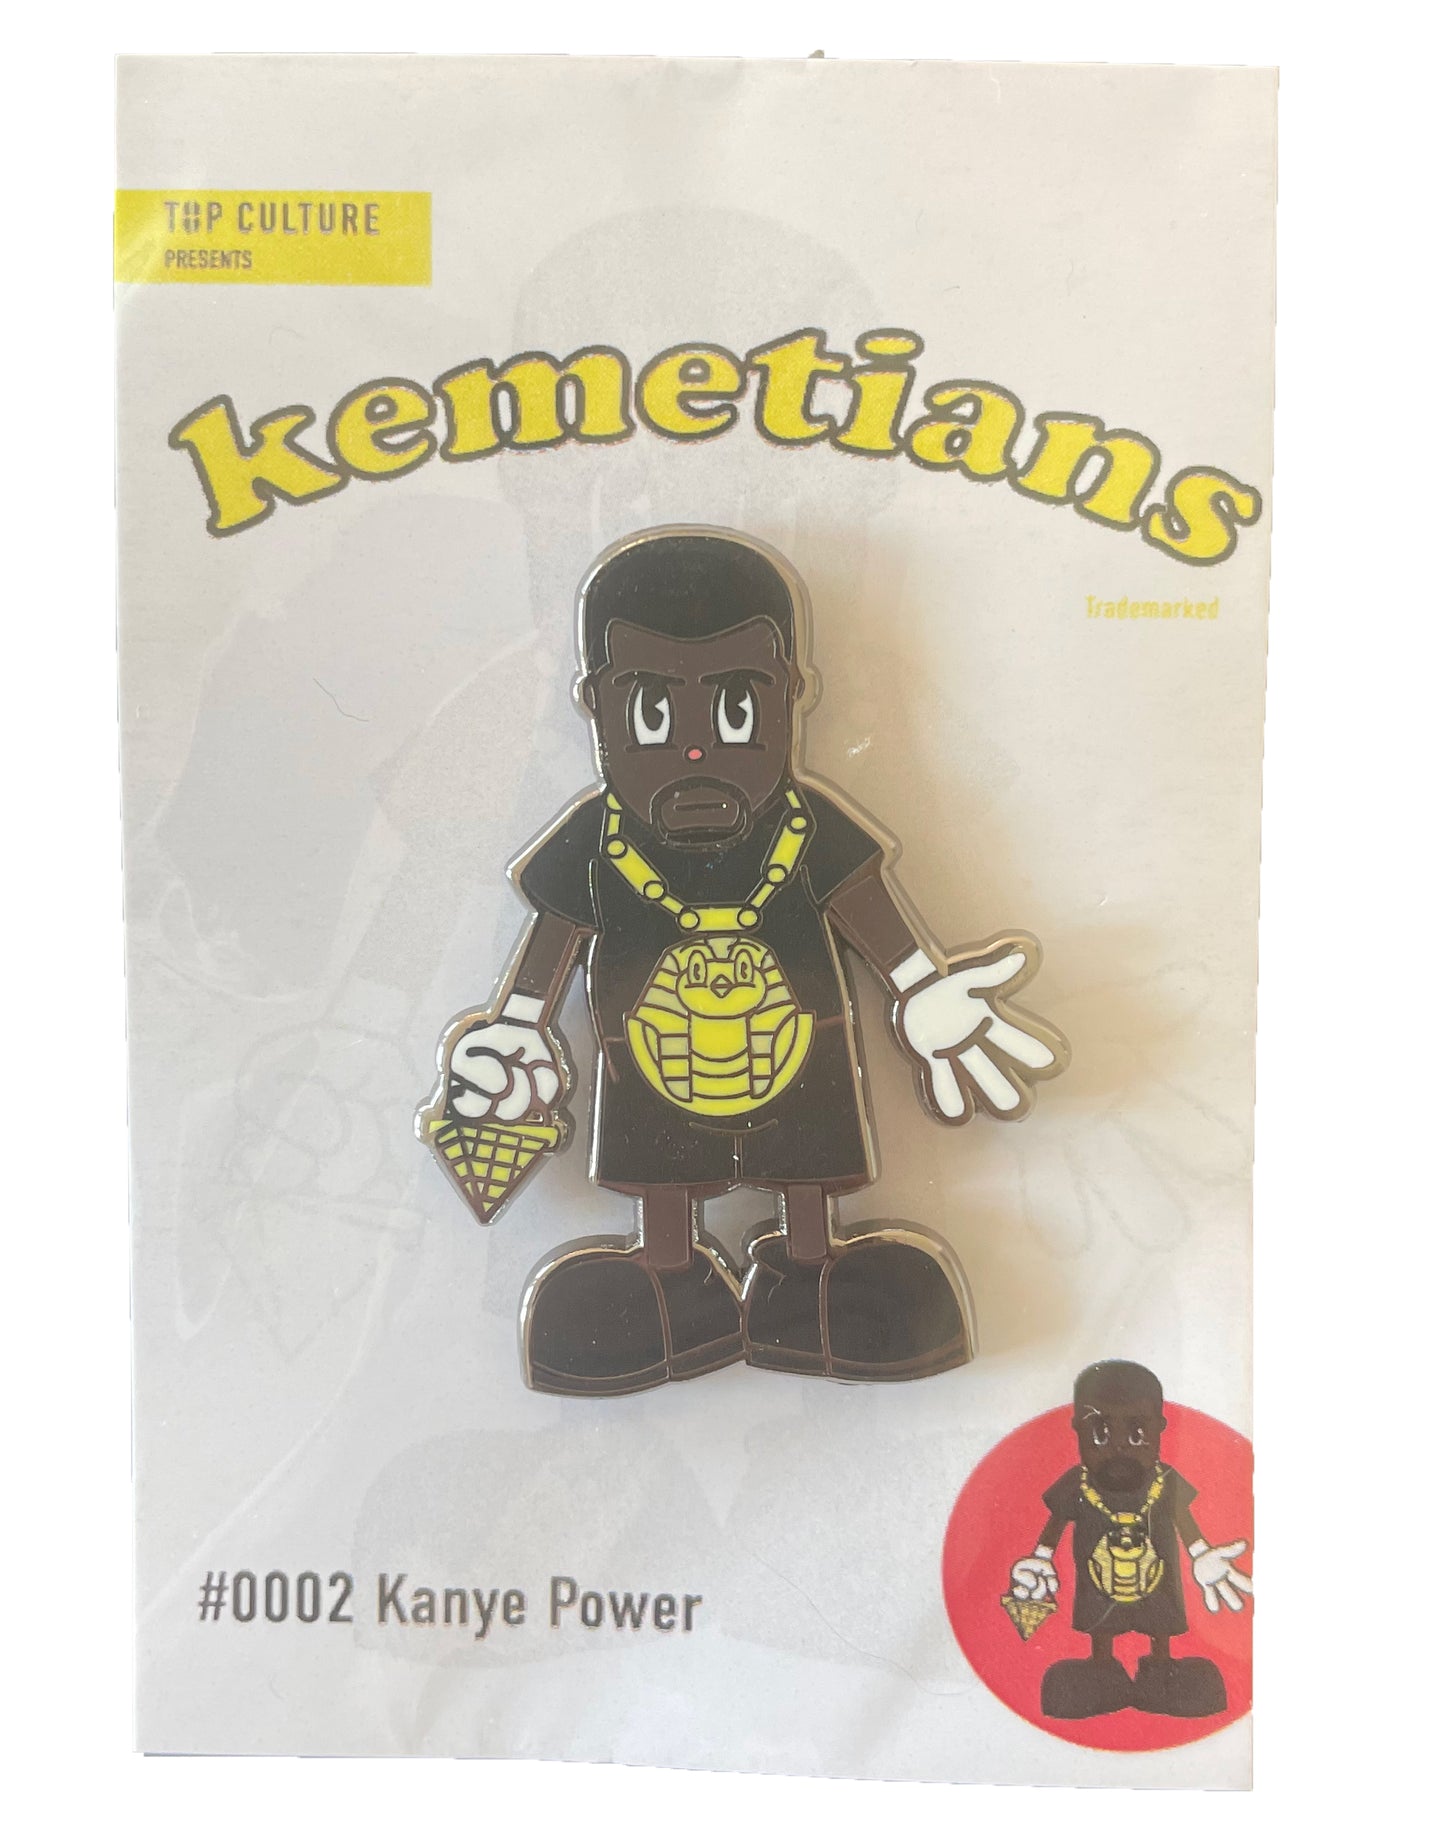 Kemetian #0002 Kanye Power pin collectible